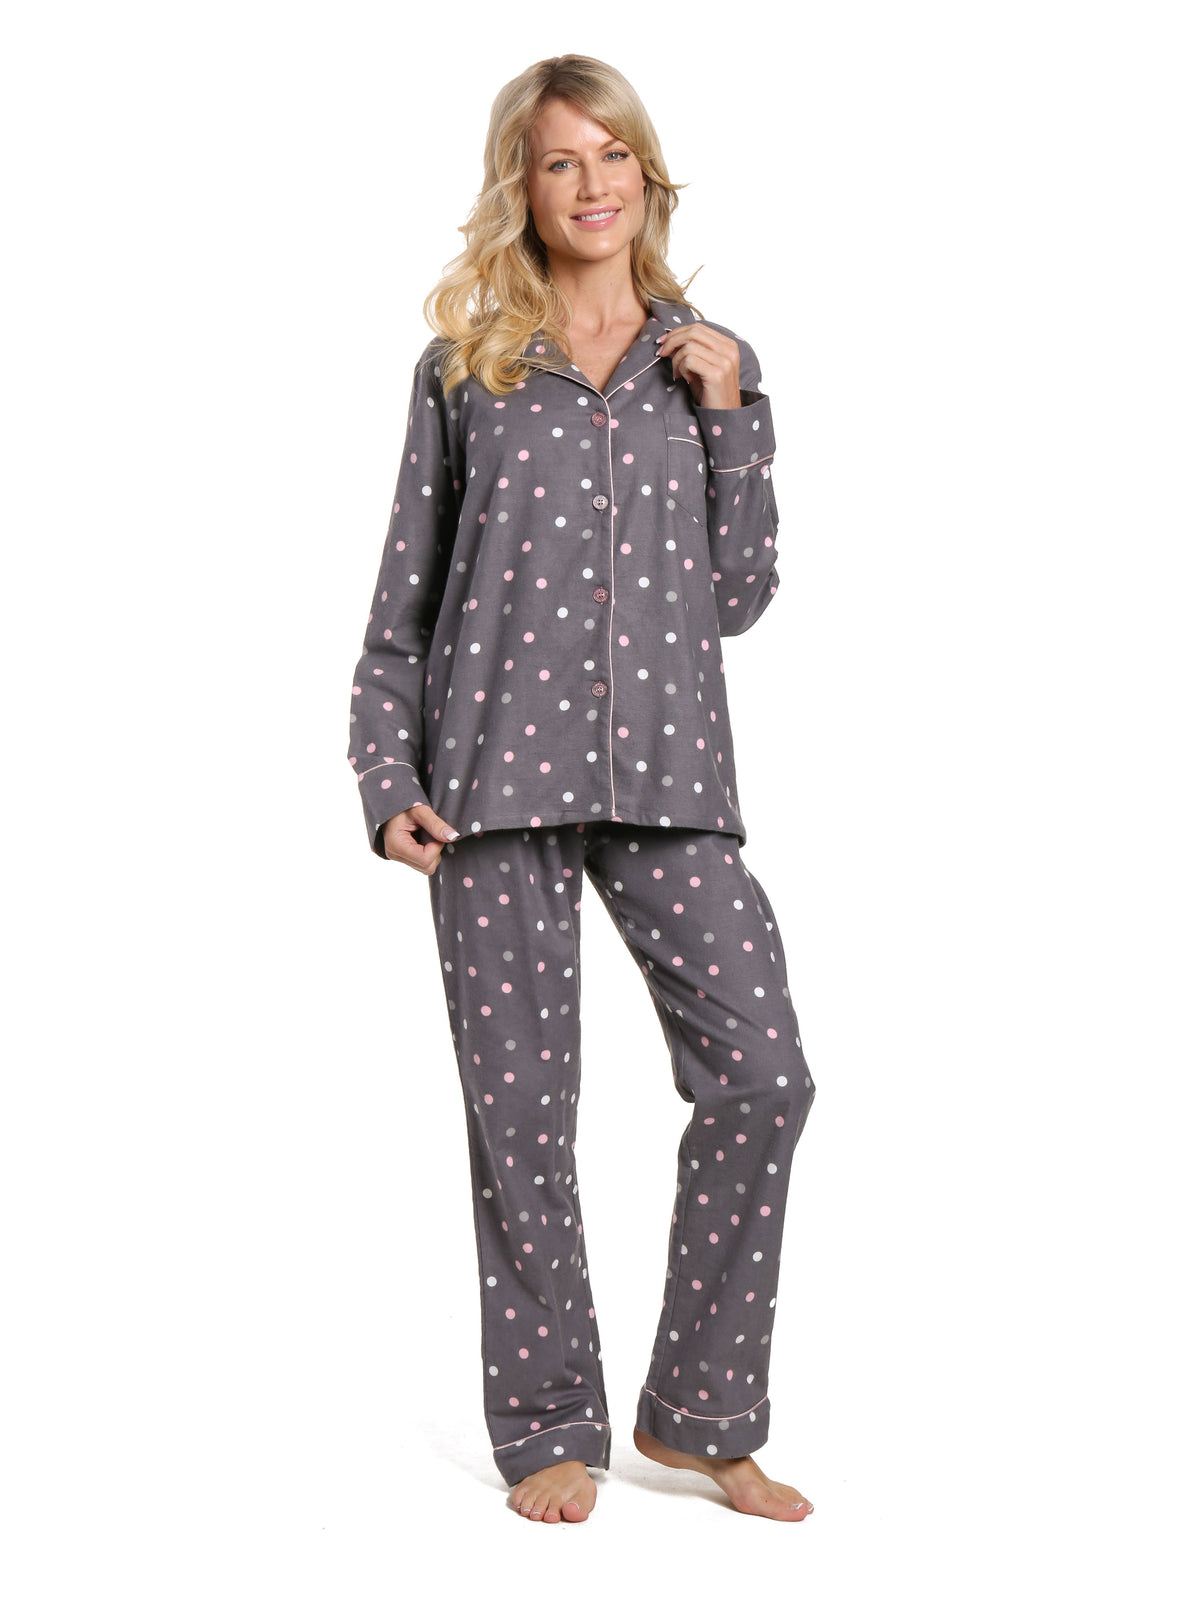 Women's 100% Cotton Flannel Pajama Sleepwear Set - Polka Medley Gray-Pink